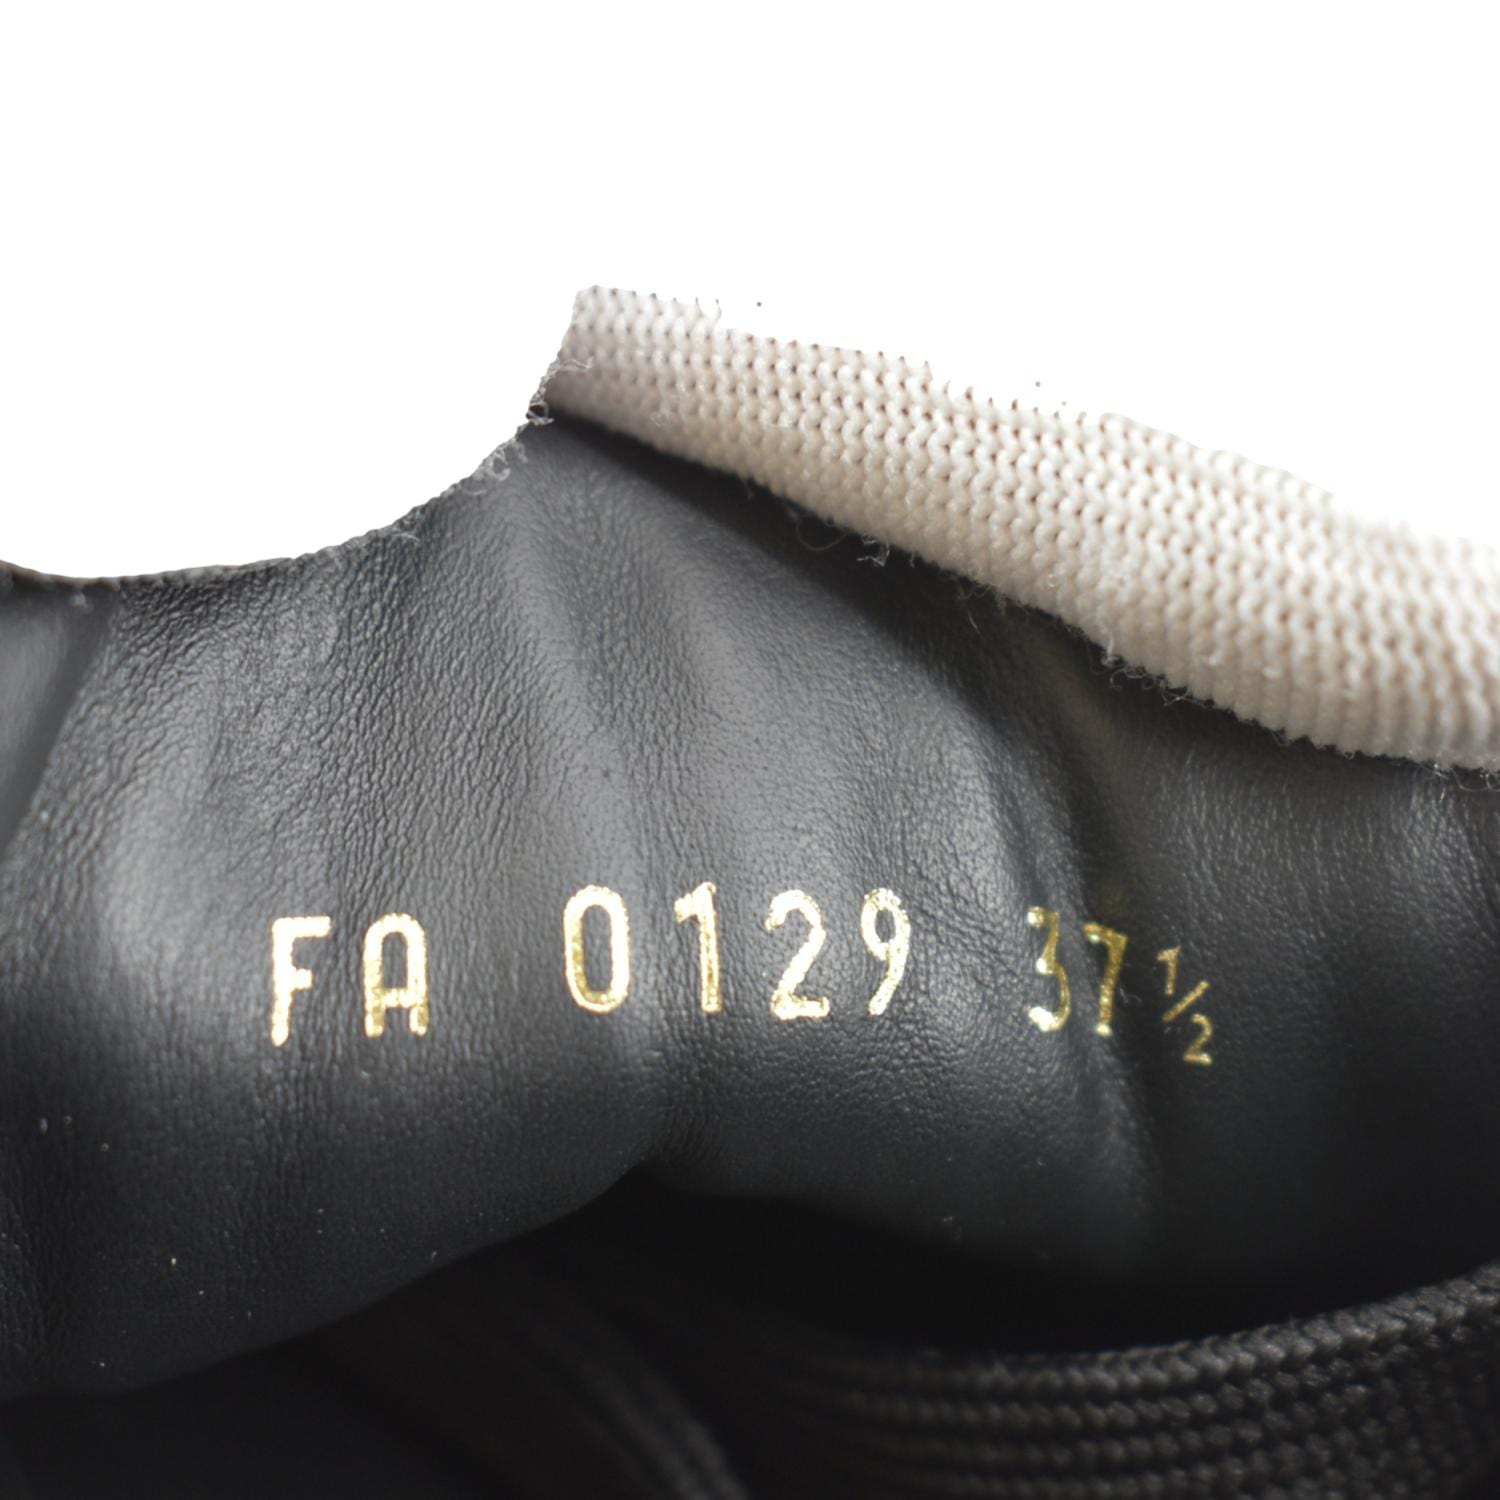 Louis Vuitton Time Out line sneakers Monogram calf leather white metallic  37 1/2